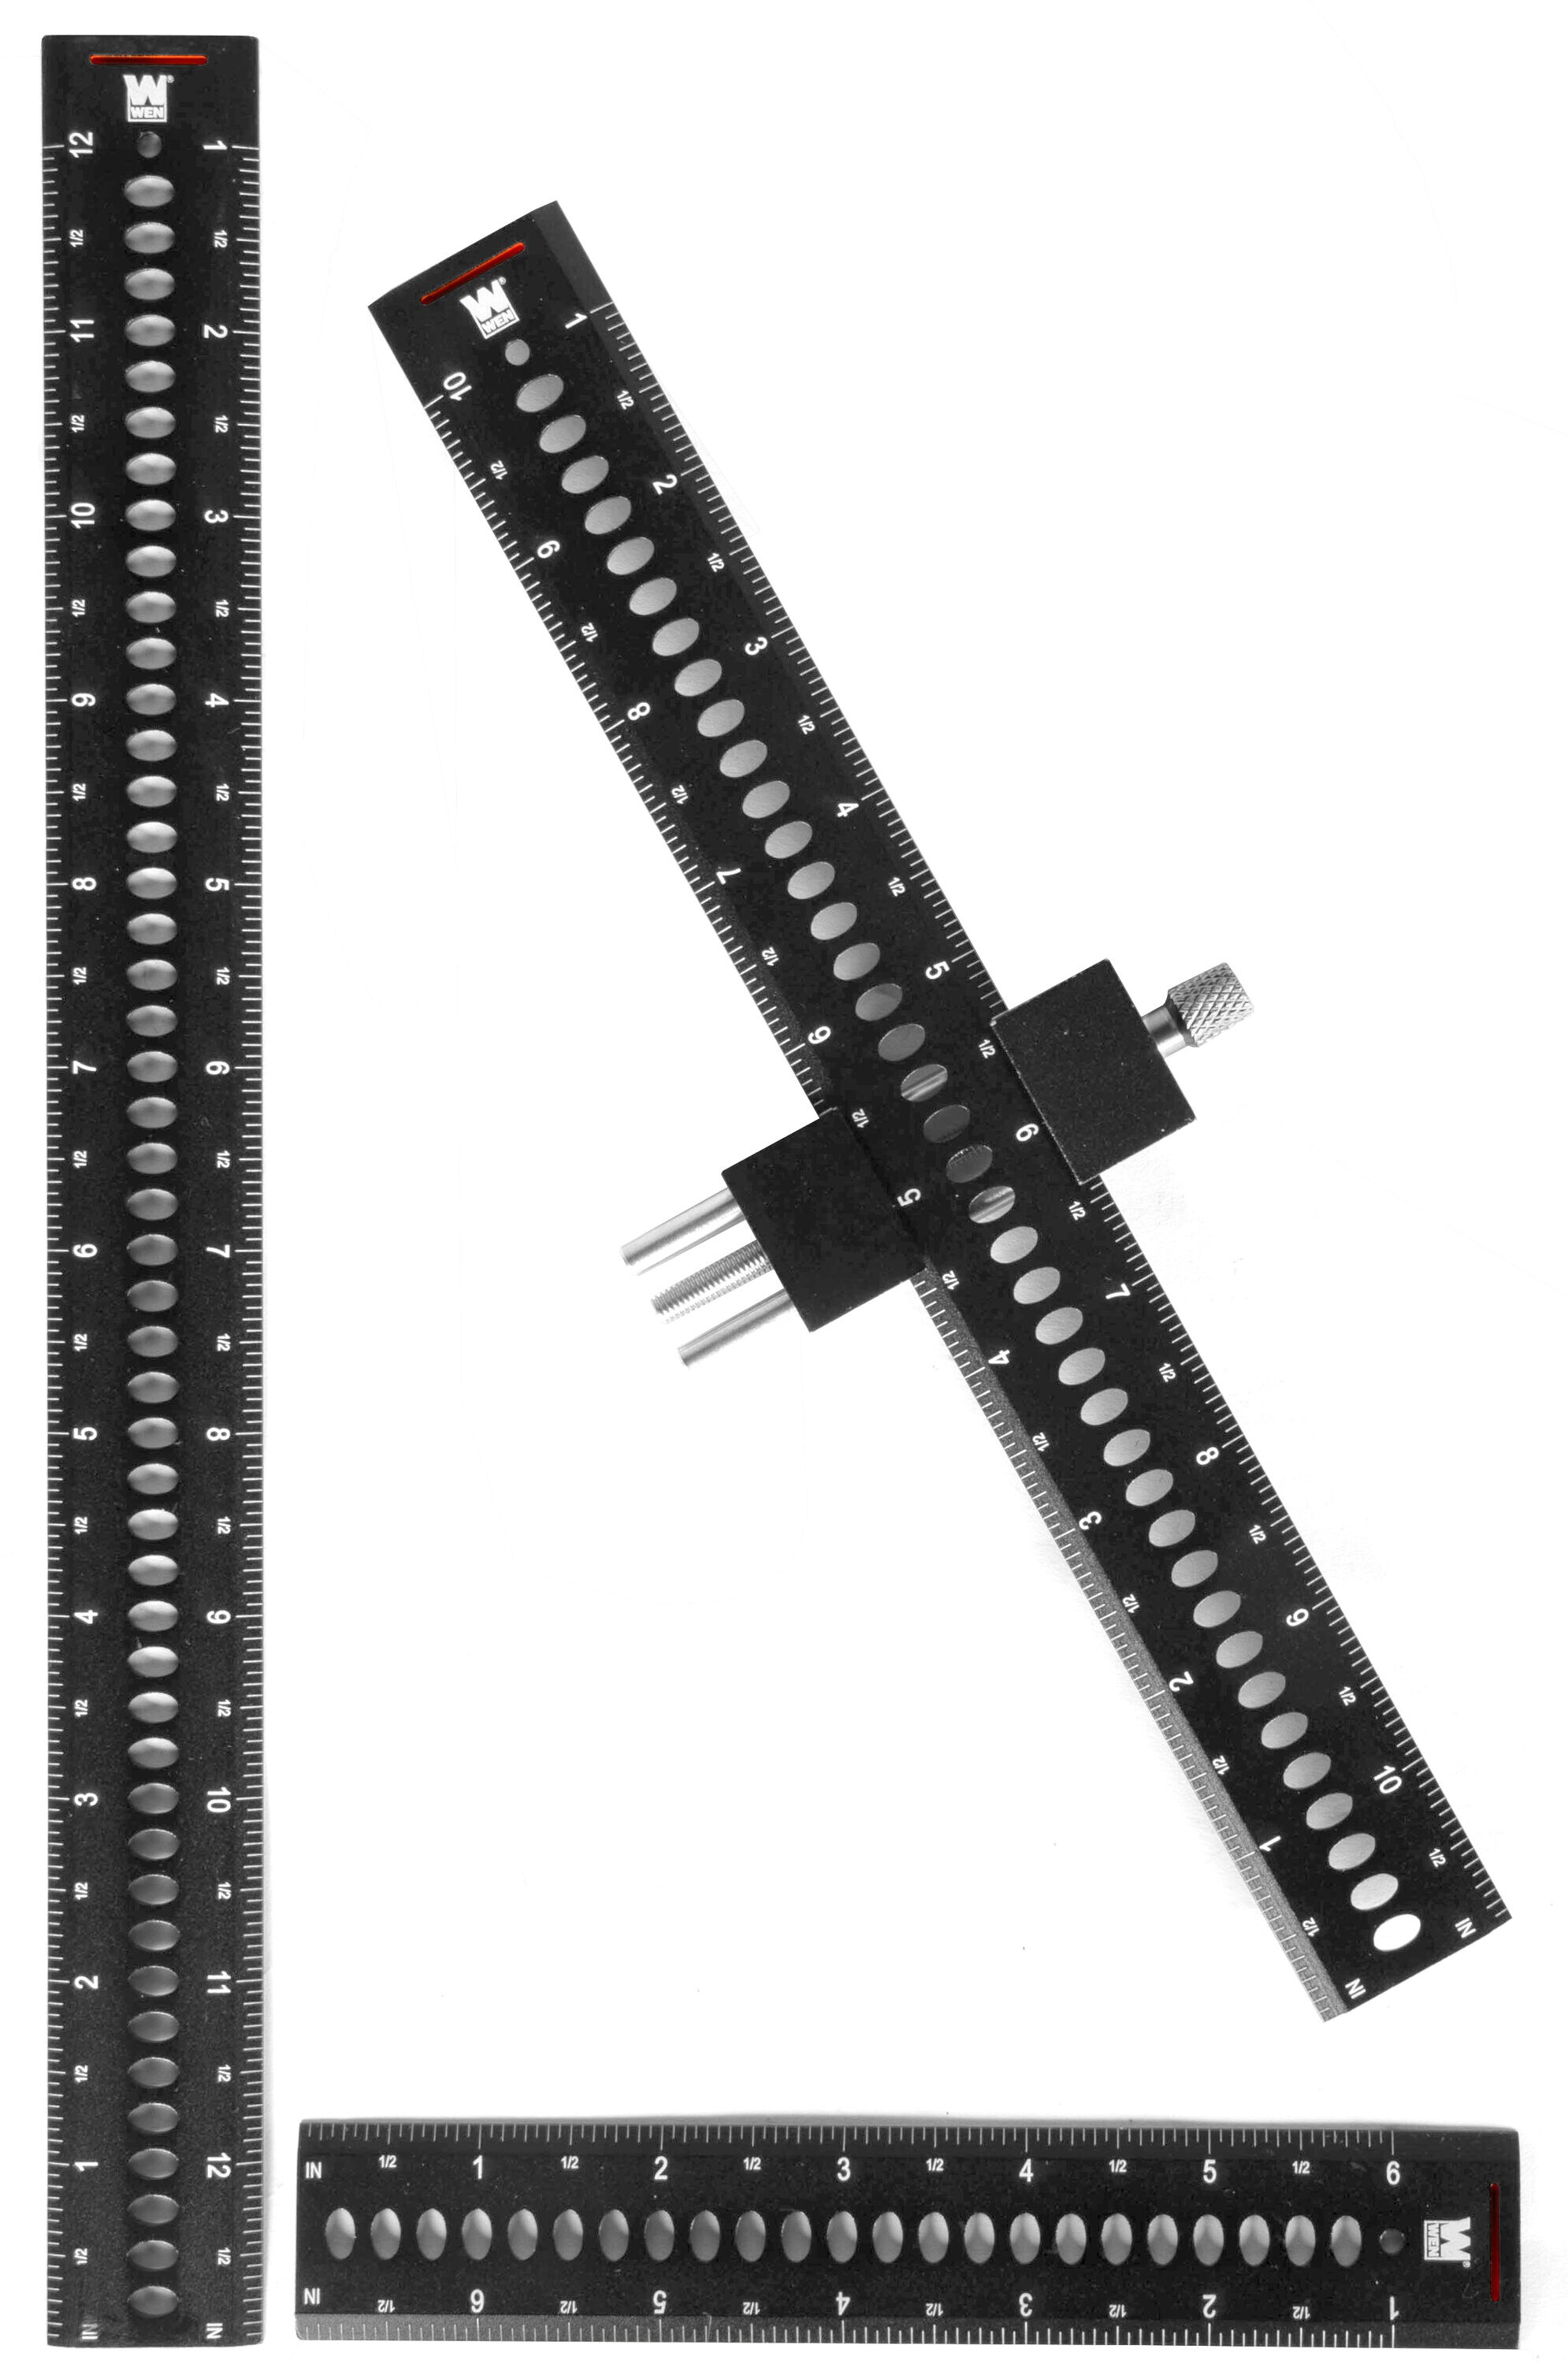 Swanson Tool Company 4-ft Metal Ruler in the Yardsticks & Rulers department  at